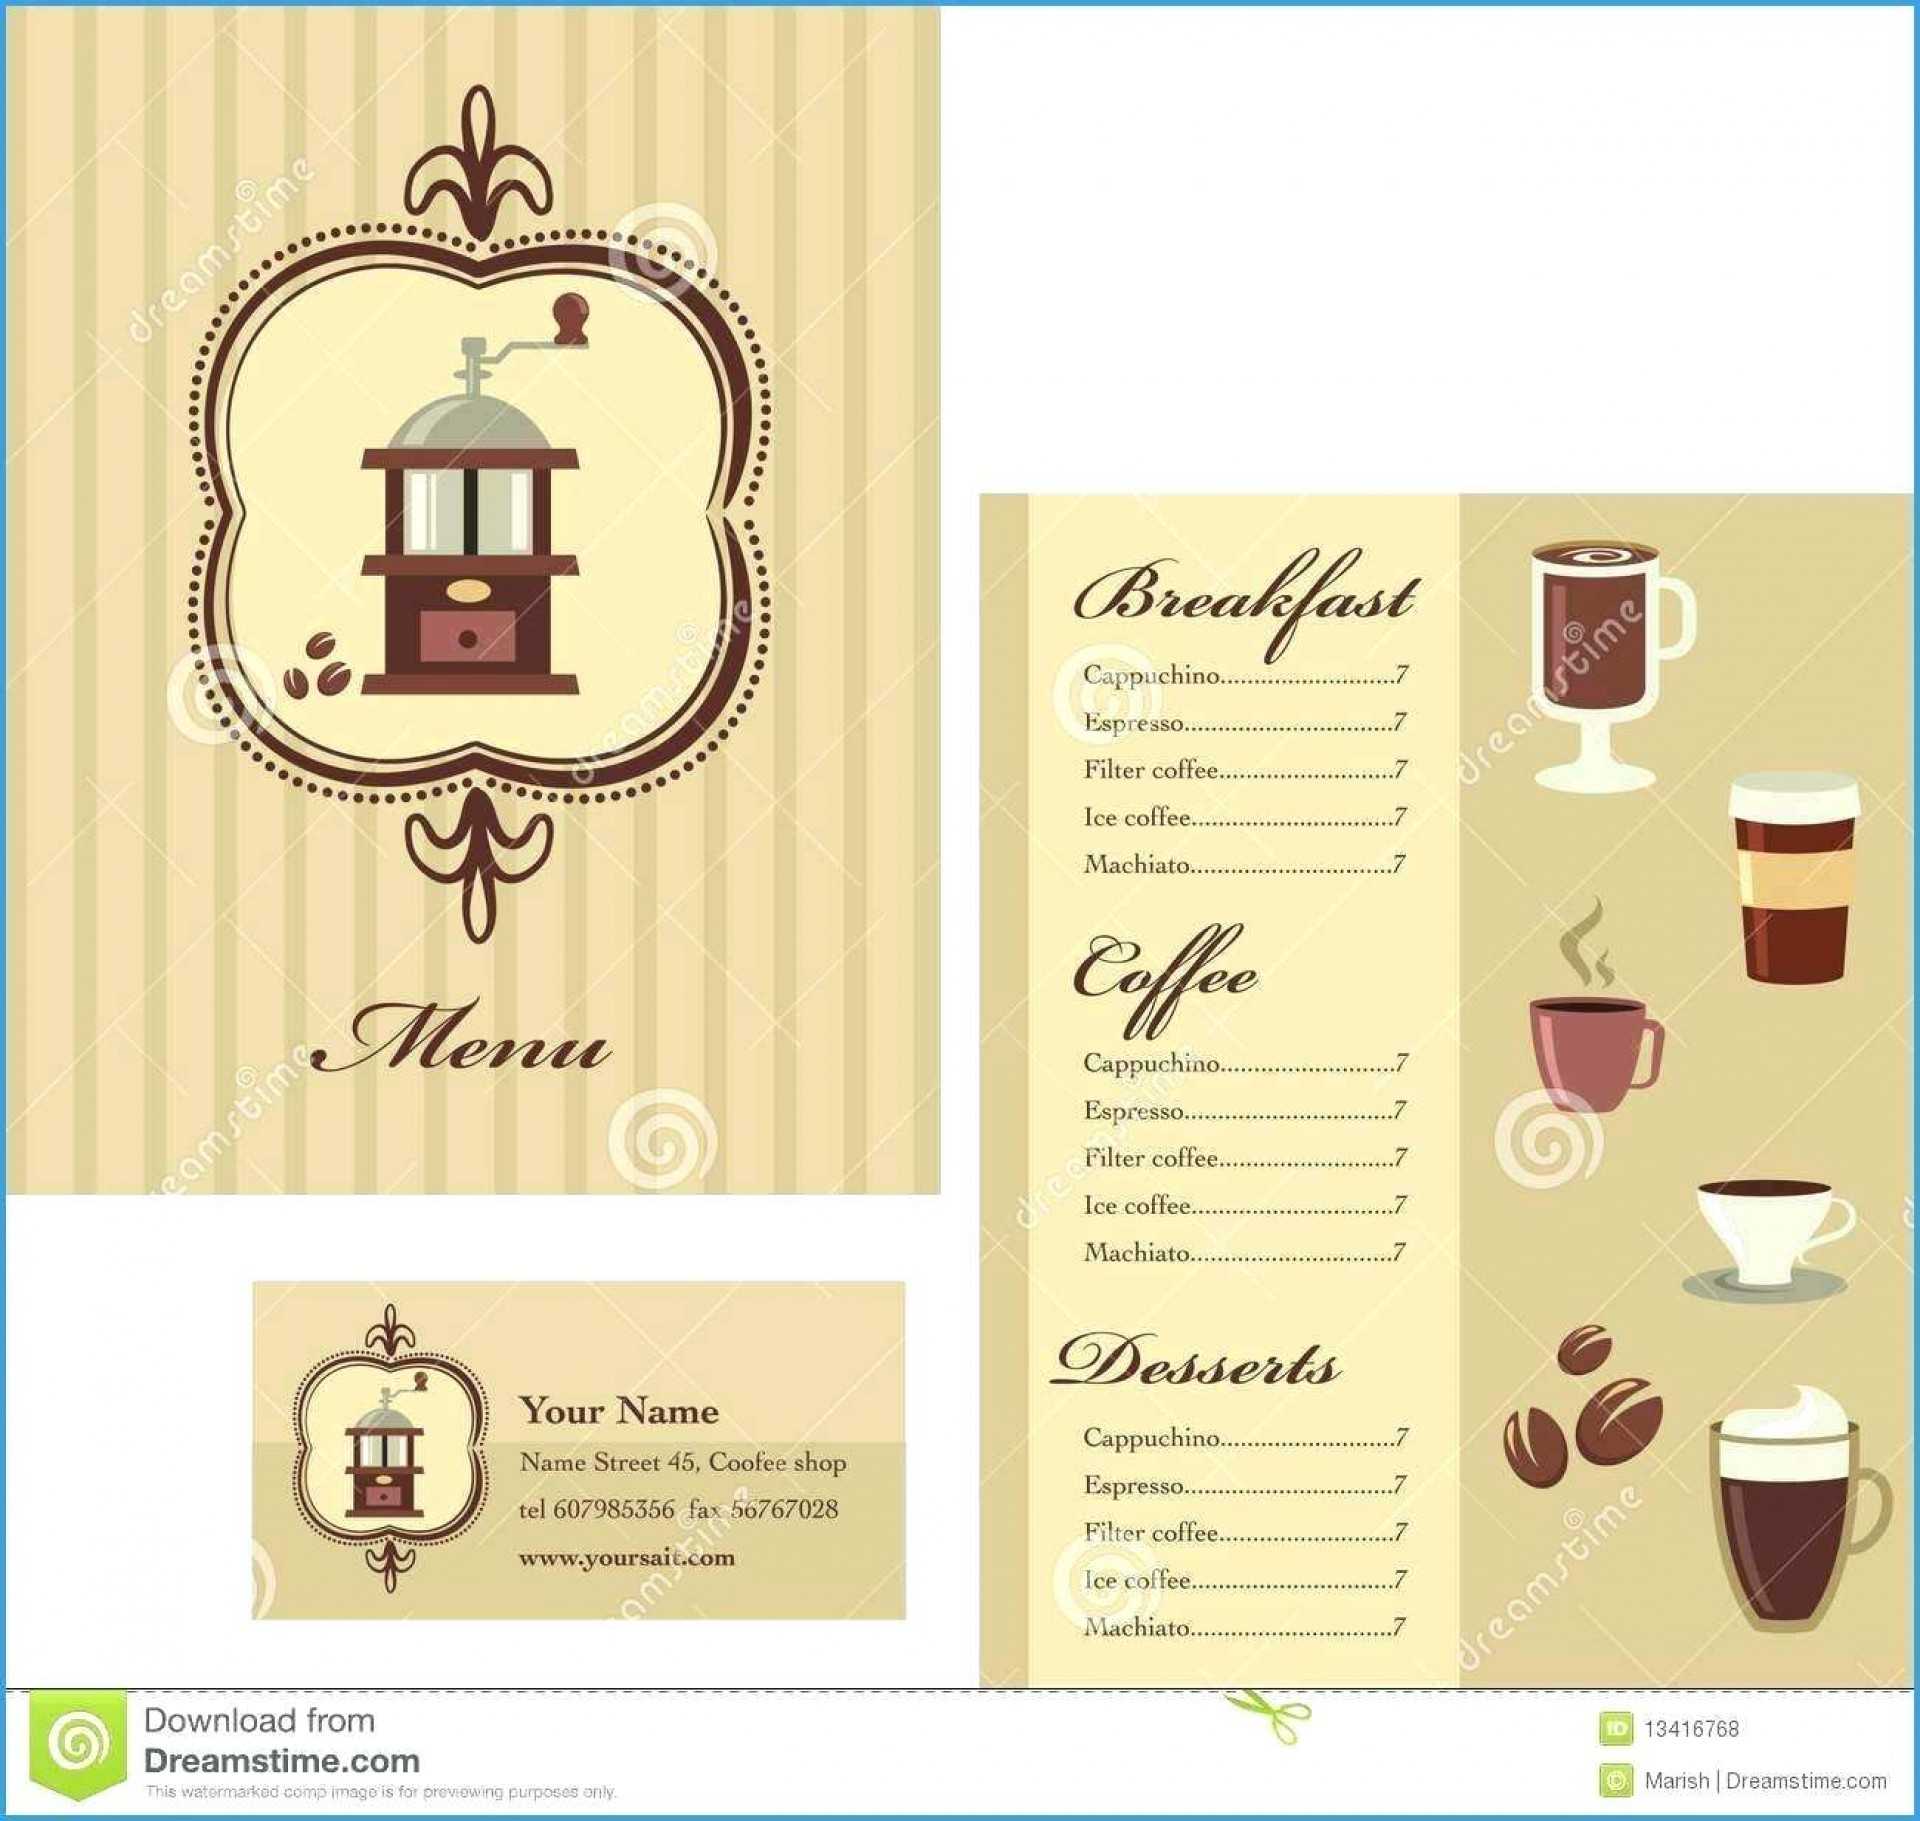 028 Menu Template Free Download Beautiful And Business Card For Coffee Business Card Template Free